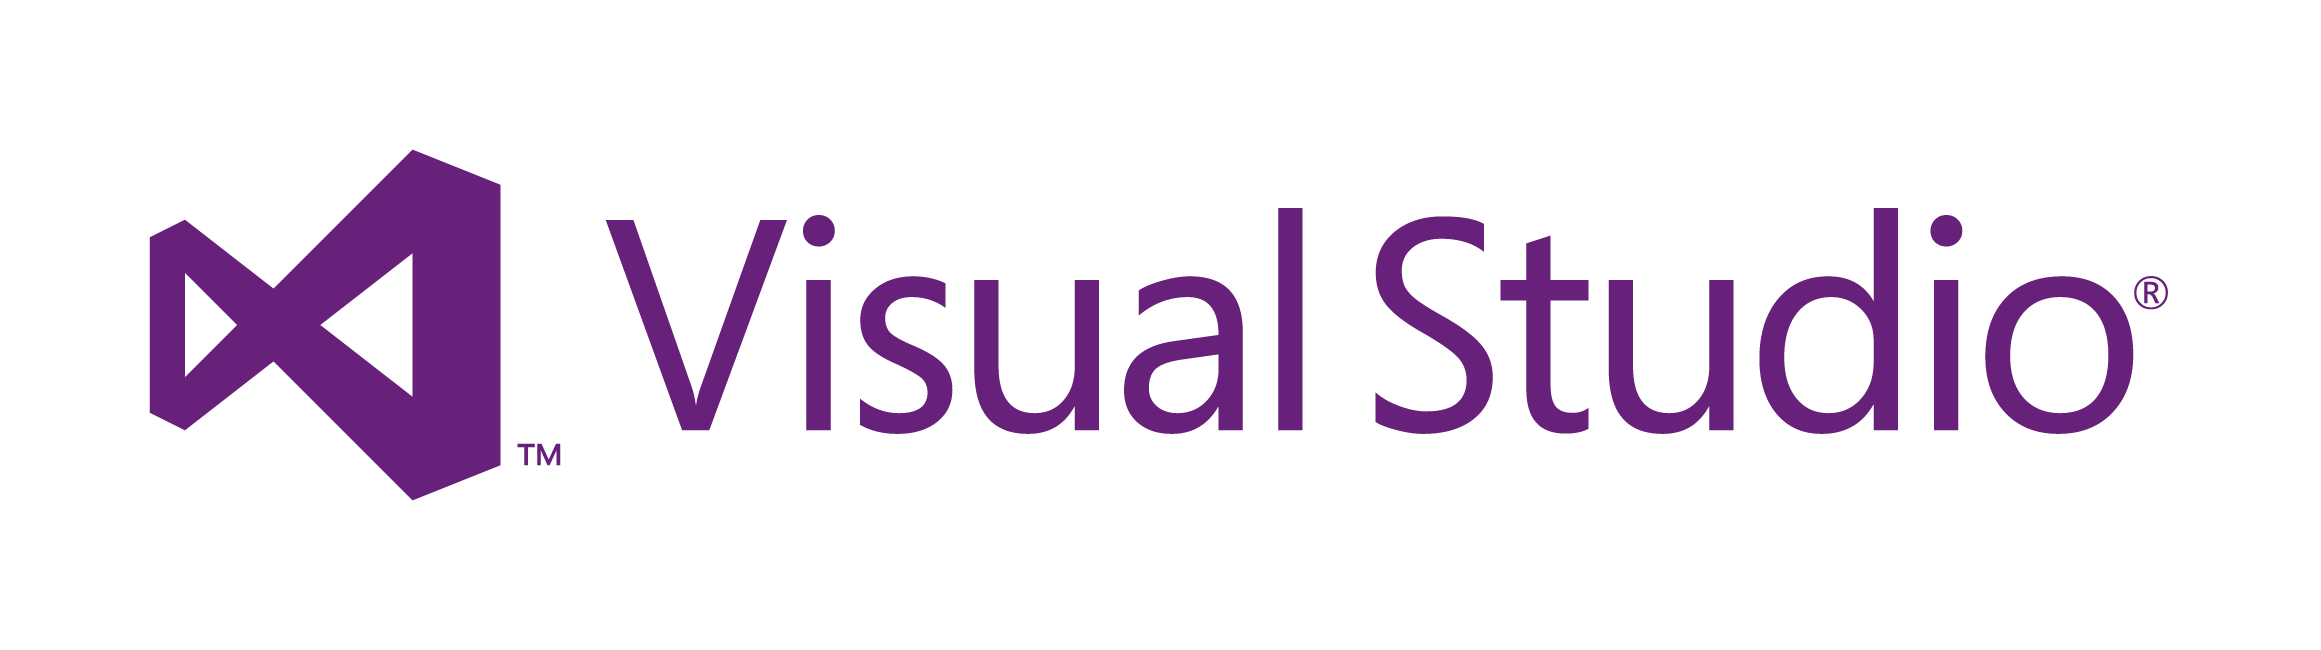 Visual pleasing. Microsoft Visual Studio. Visual Studio логотип. MS Visual Studio. Майкрософт вижуал студио.